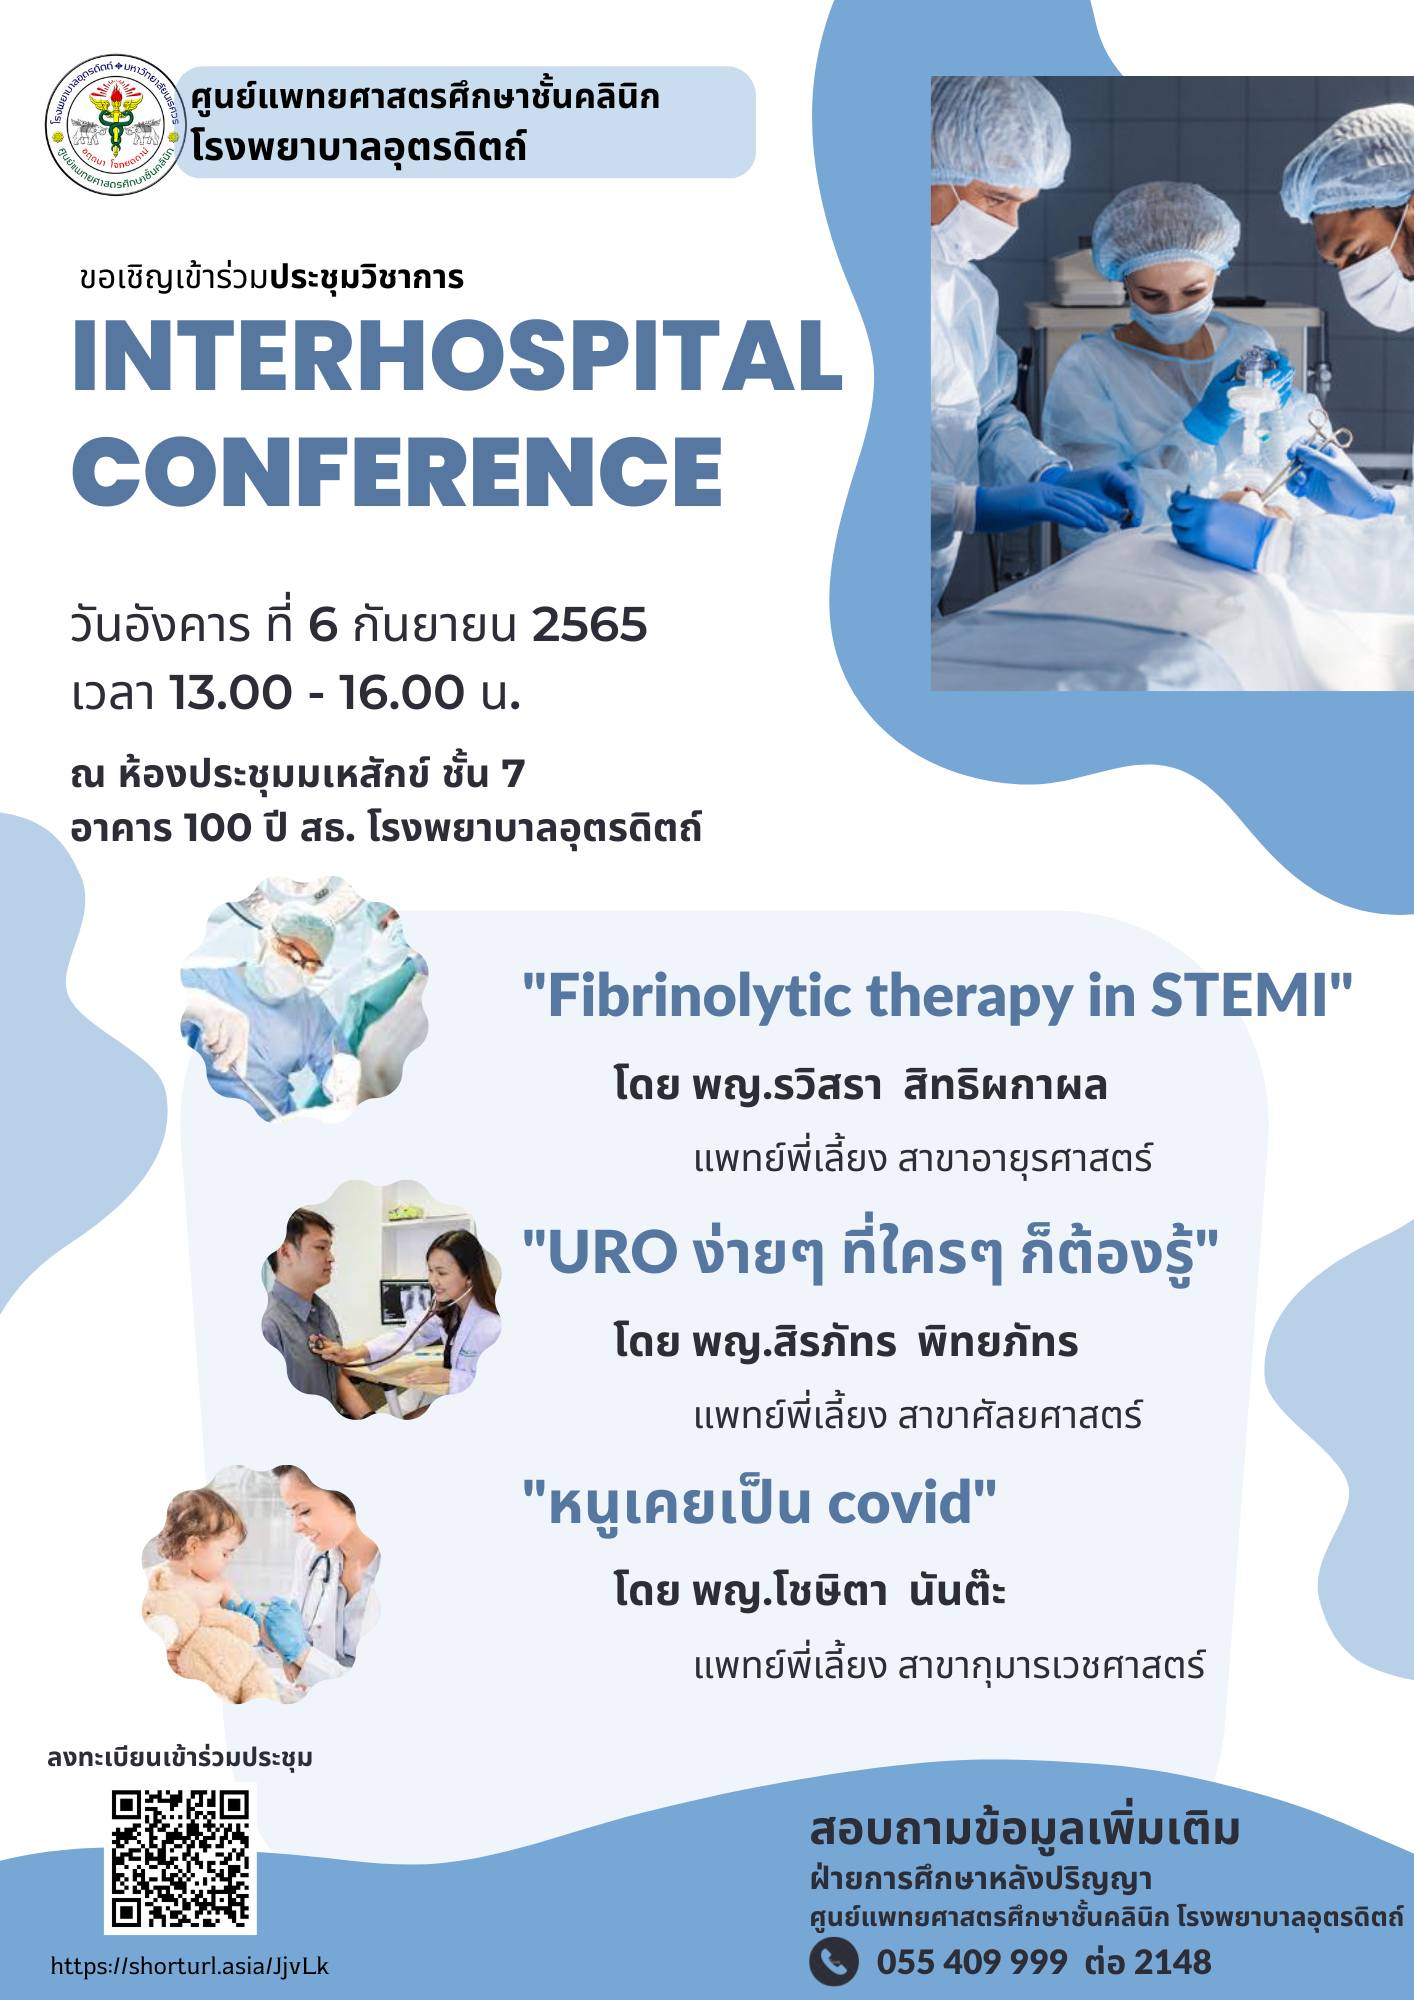 Interhospital Conference ครั้งที่ 1/2565